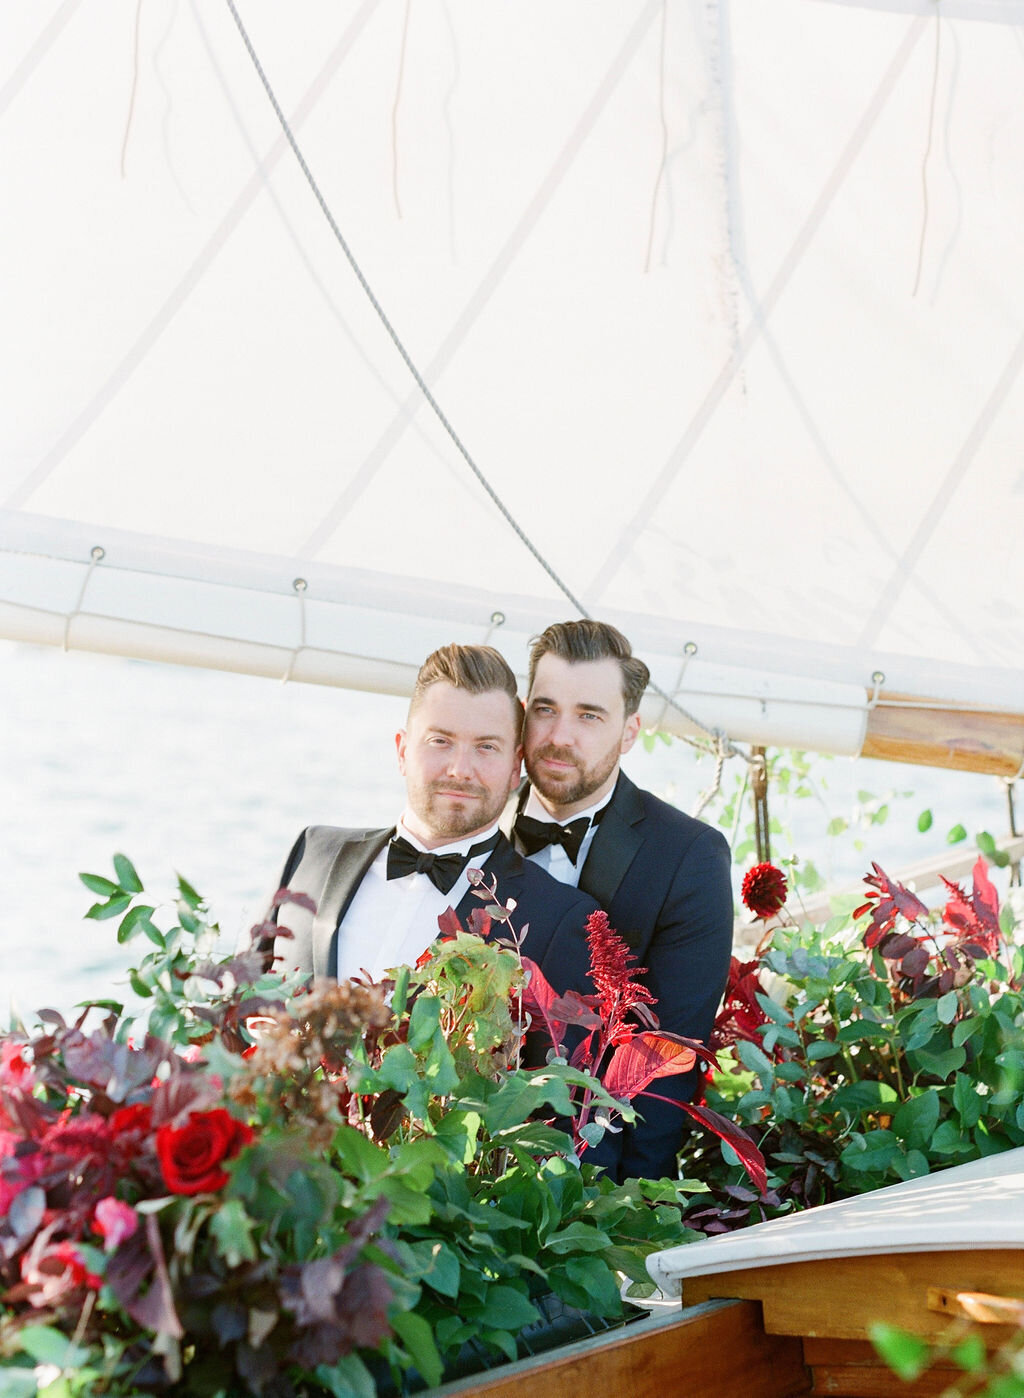 Kate-Murtaugh-Events-Boston-Harbor-sail-boat-yacht-elopement-wedding-planner-moody-flowers-grooms